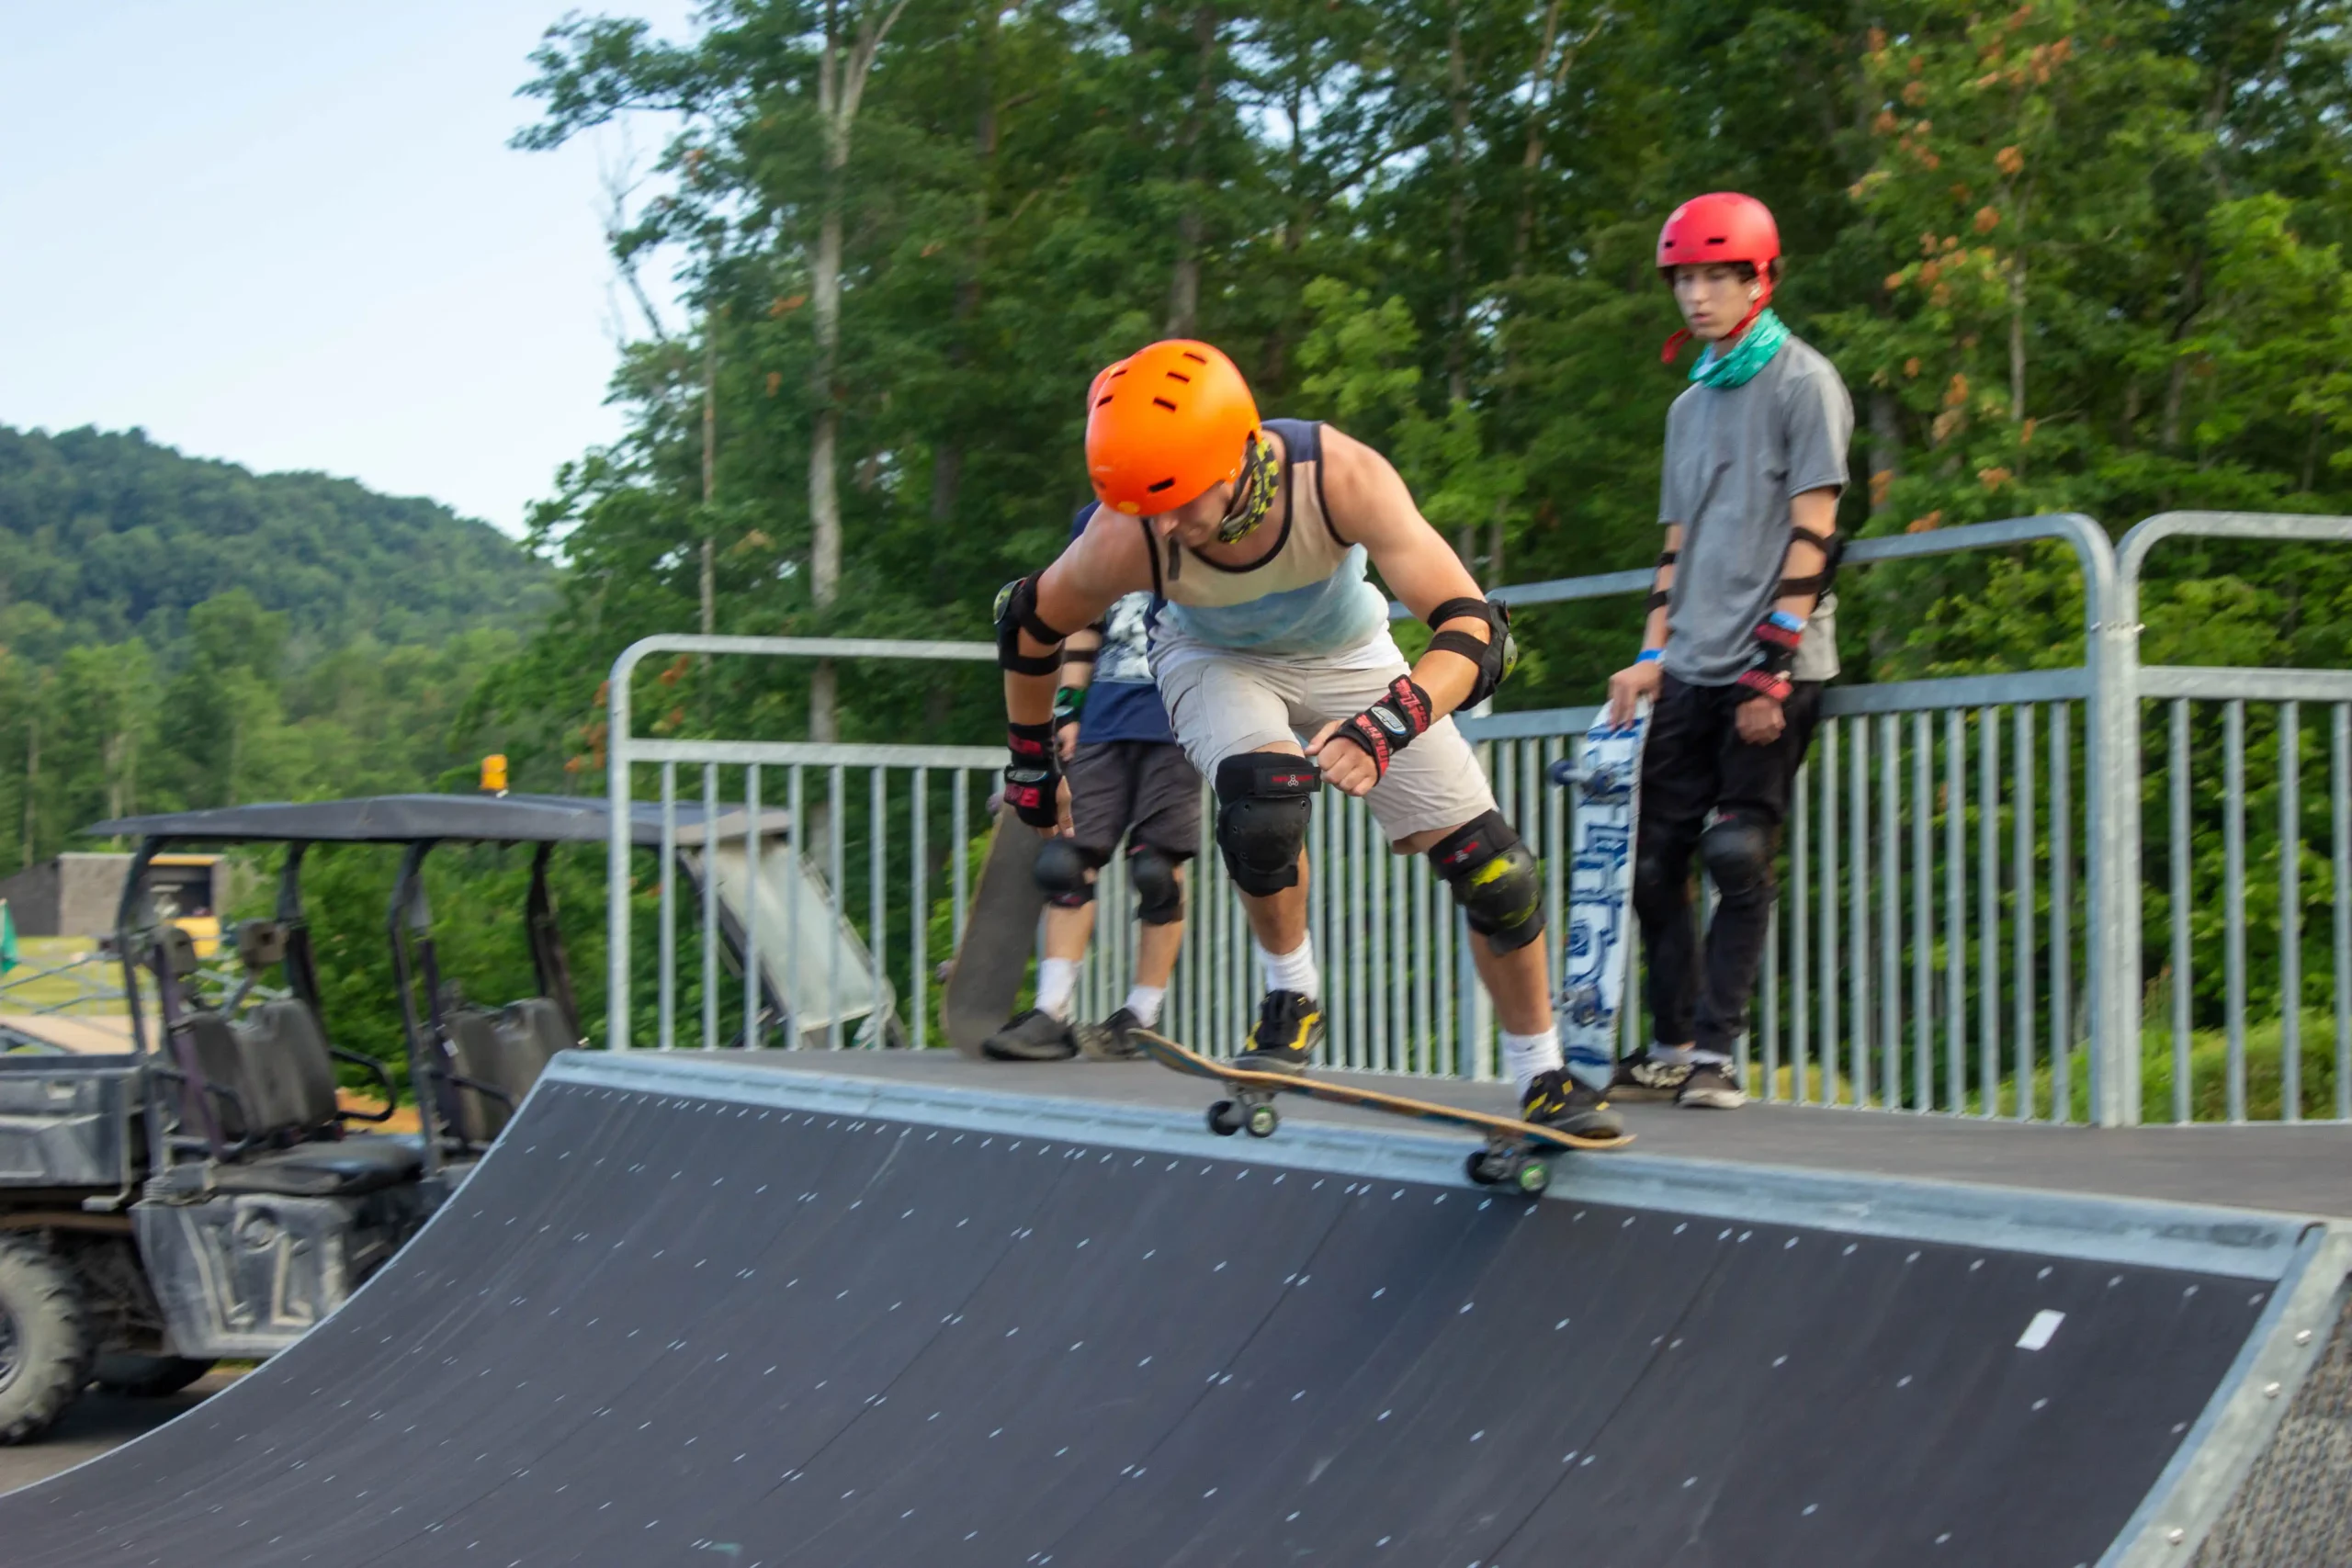 Scout camp_Action Point_Skateboard_KB_adventure_adventuresonwheels